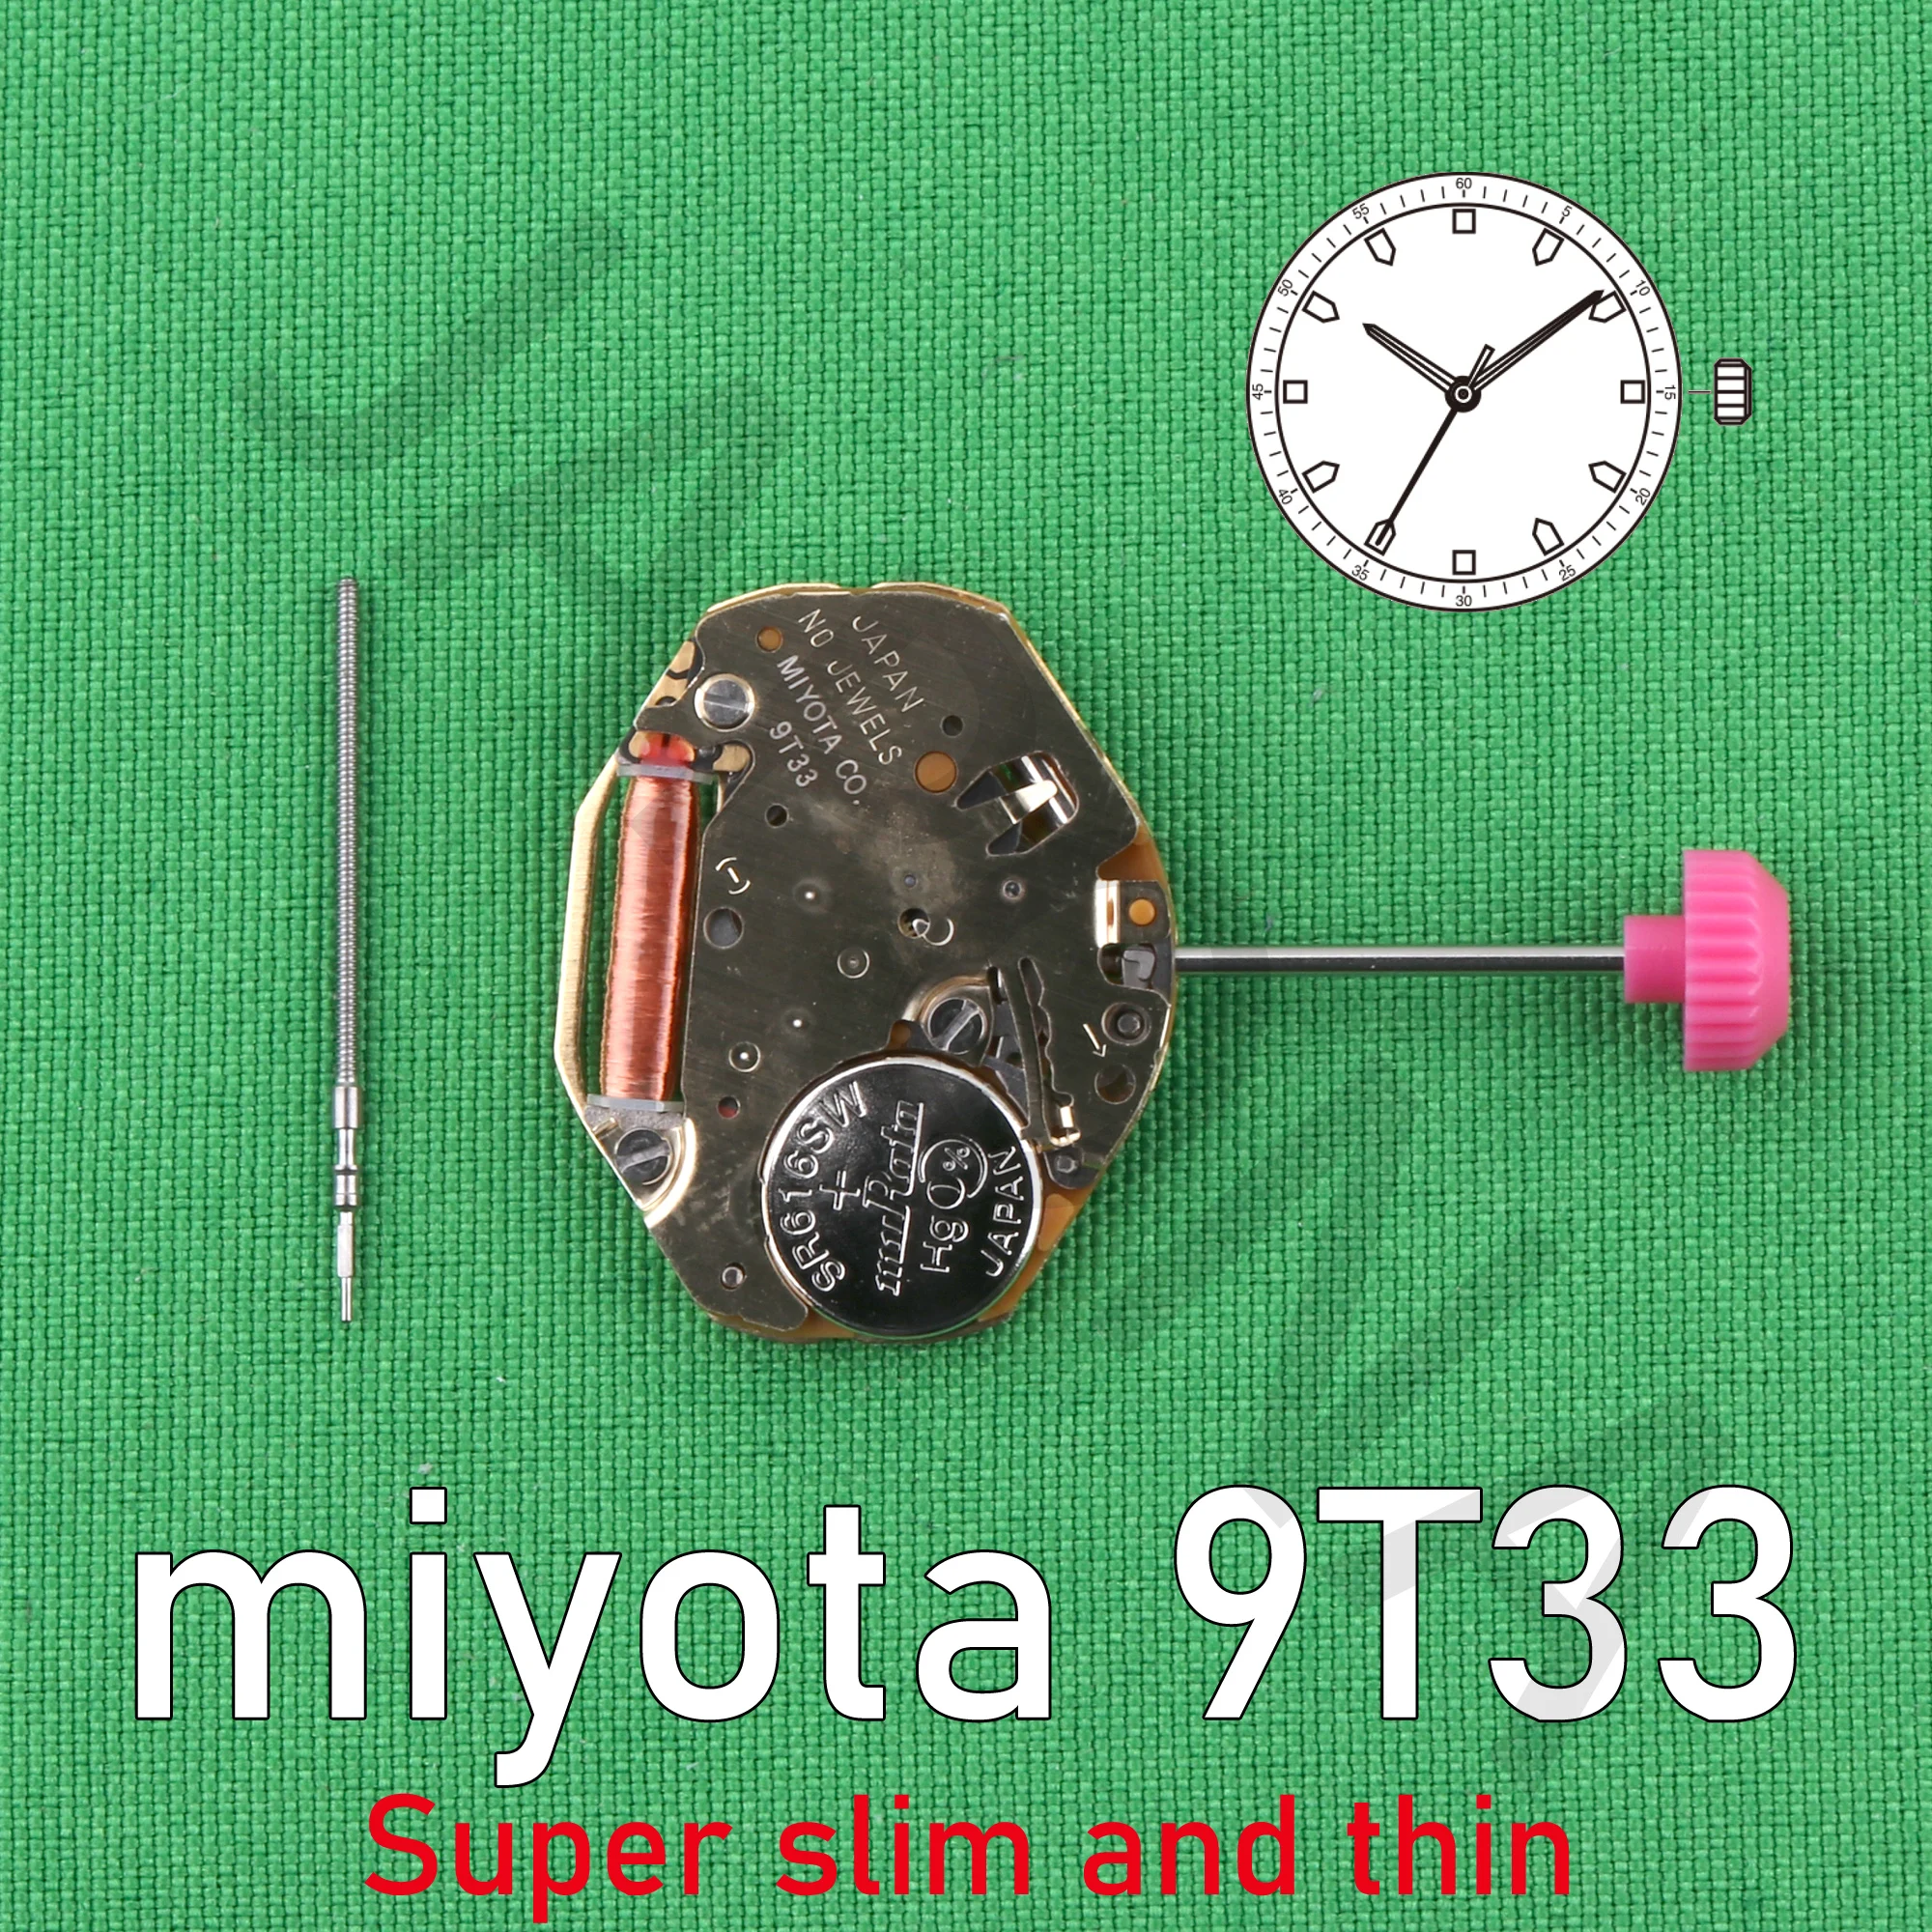 miyota 9t33 movement Super slim movement quartz movement Perfect for designs with an ultra-thin profile japan movement